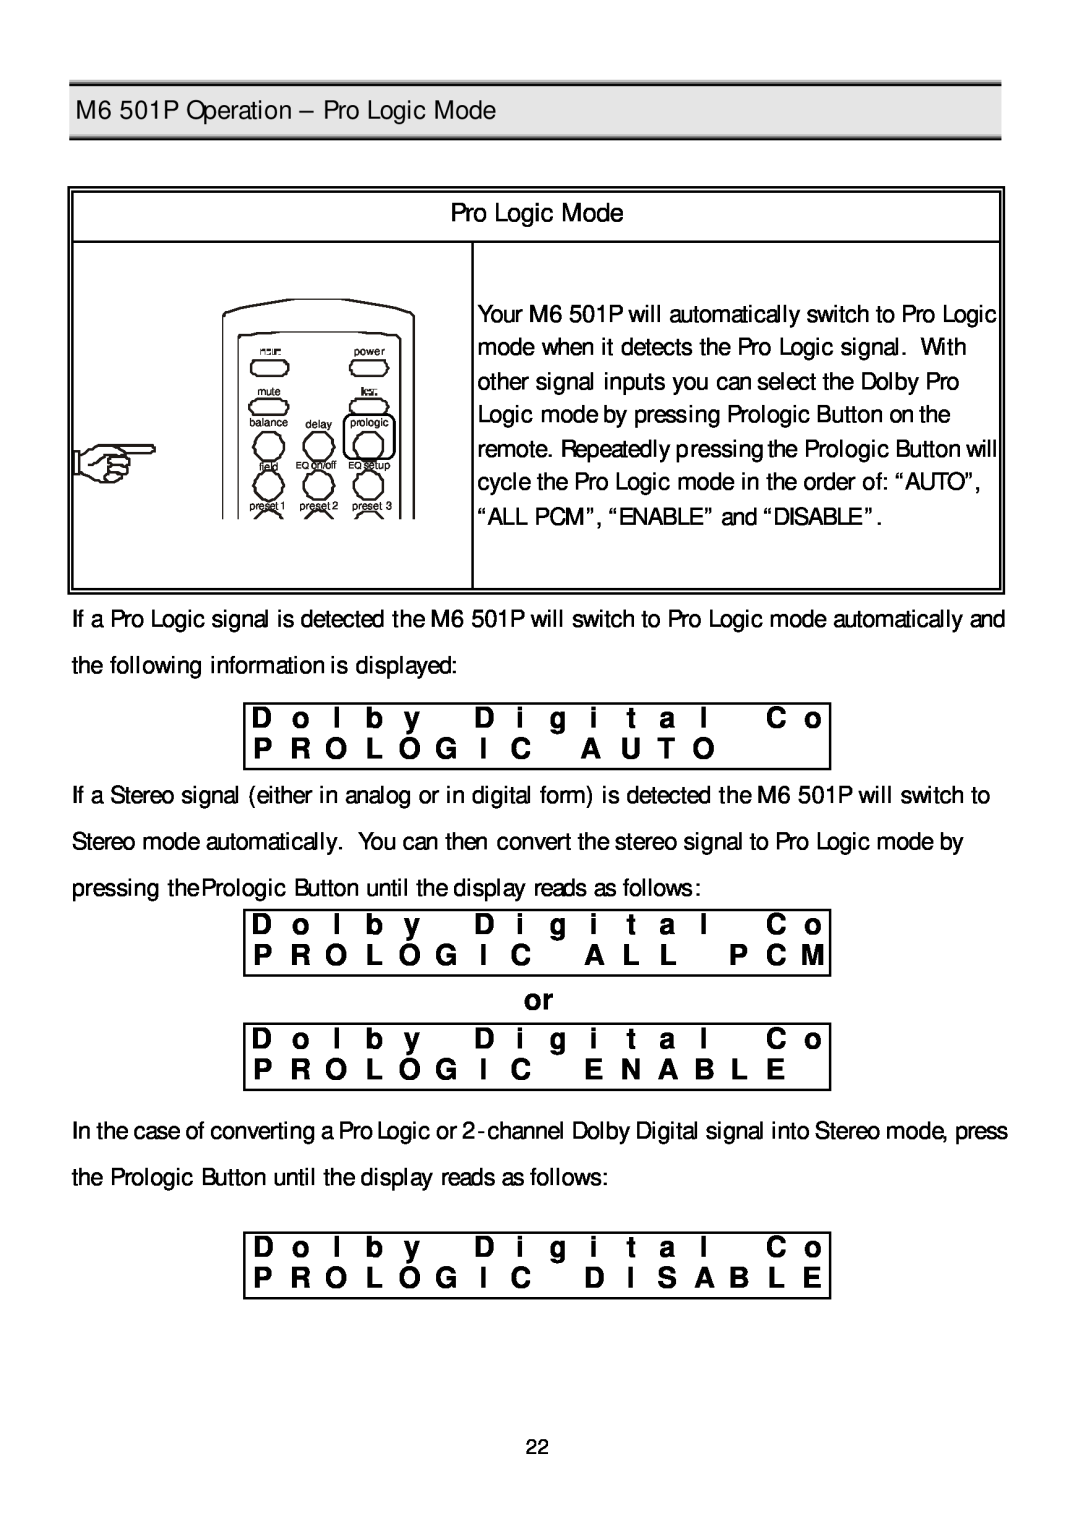 Klegg electronic manual M6 501P Operation - Pro Logic Mode 